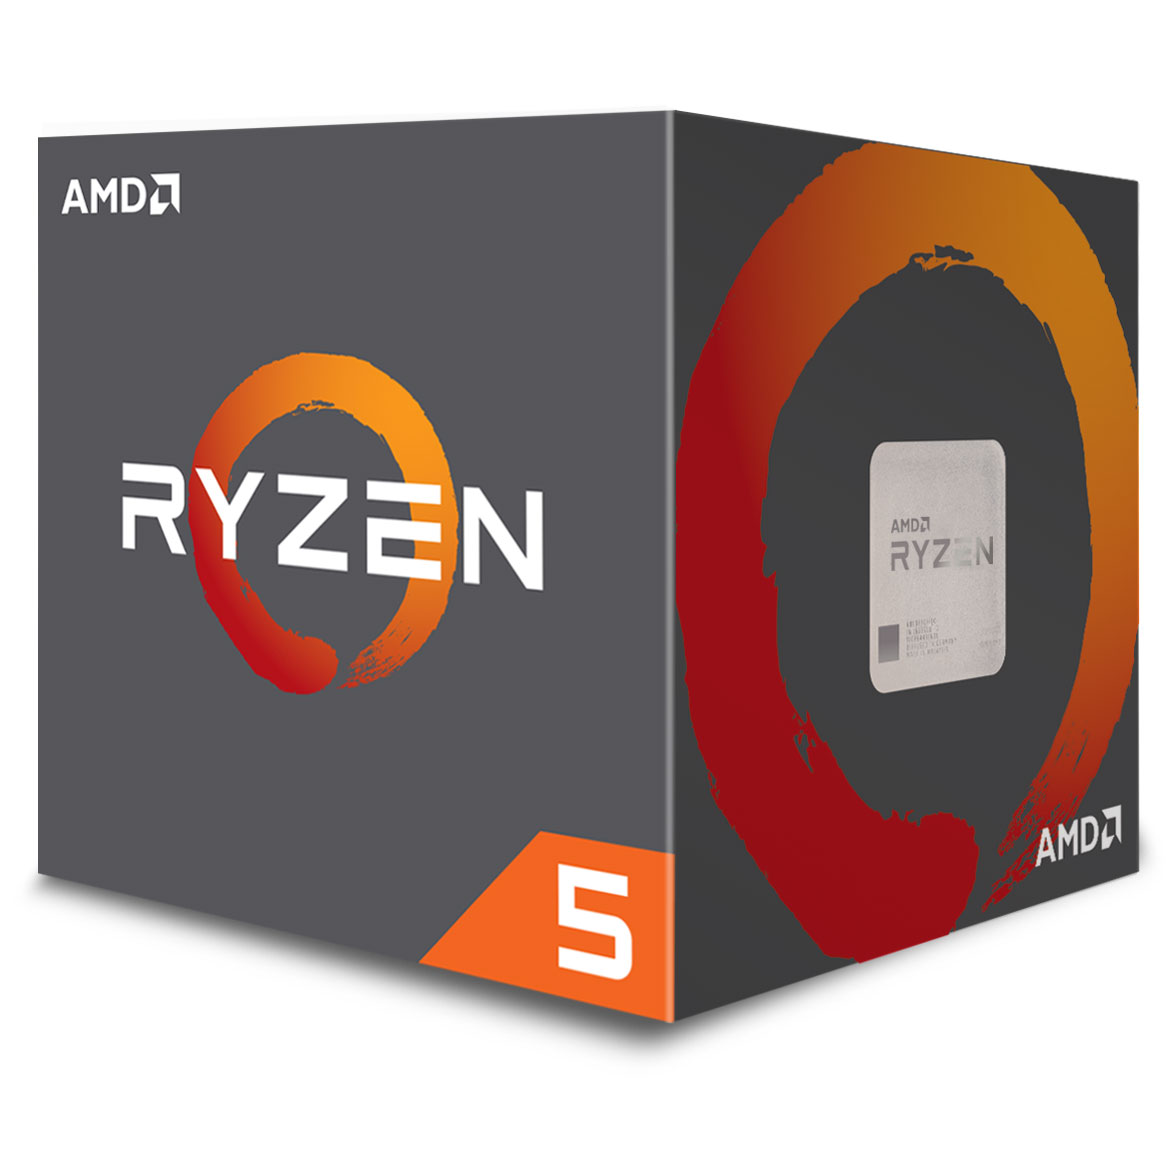 AMD Ryzen 5 1600 boxed CPU 